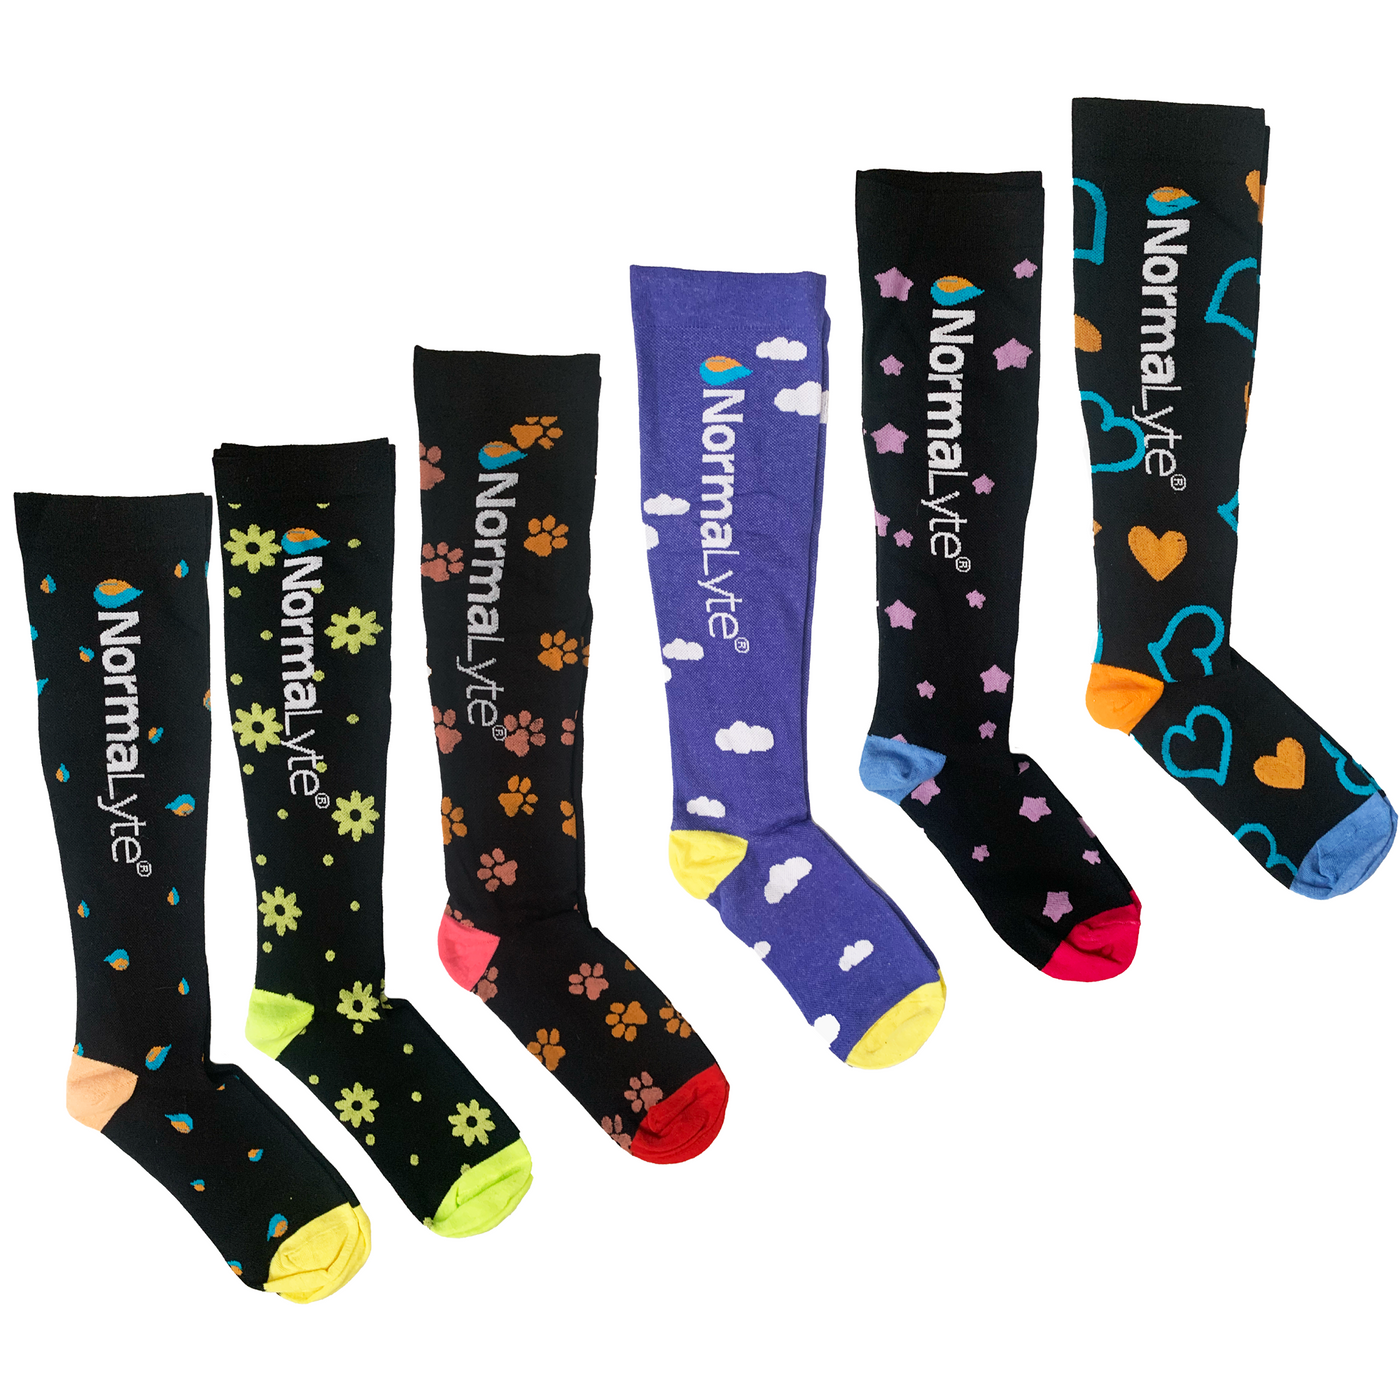 3-Pack of Fun Graduated Compression Socks (Random Selection): 20-30mmHg